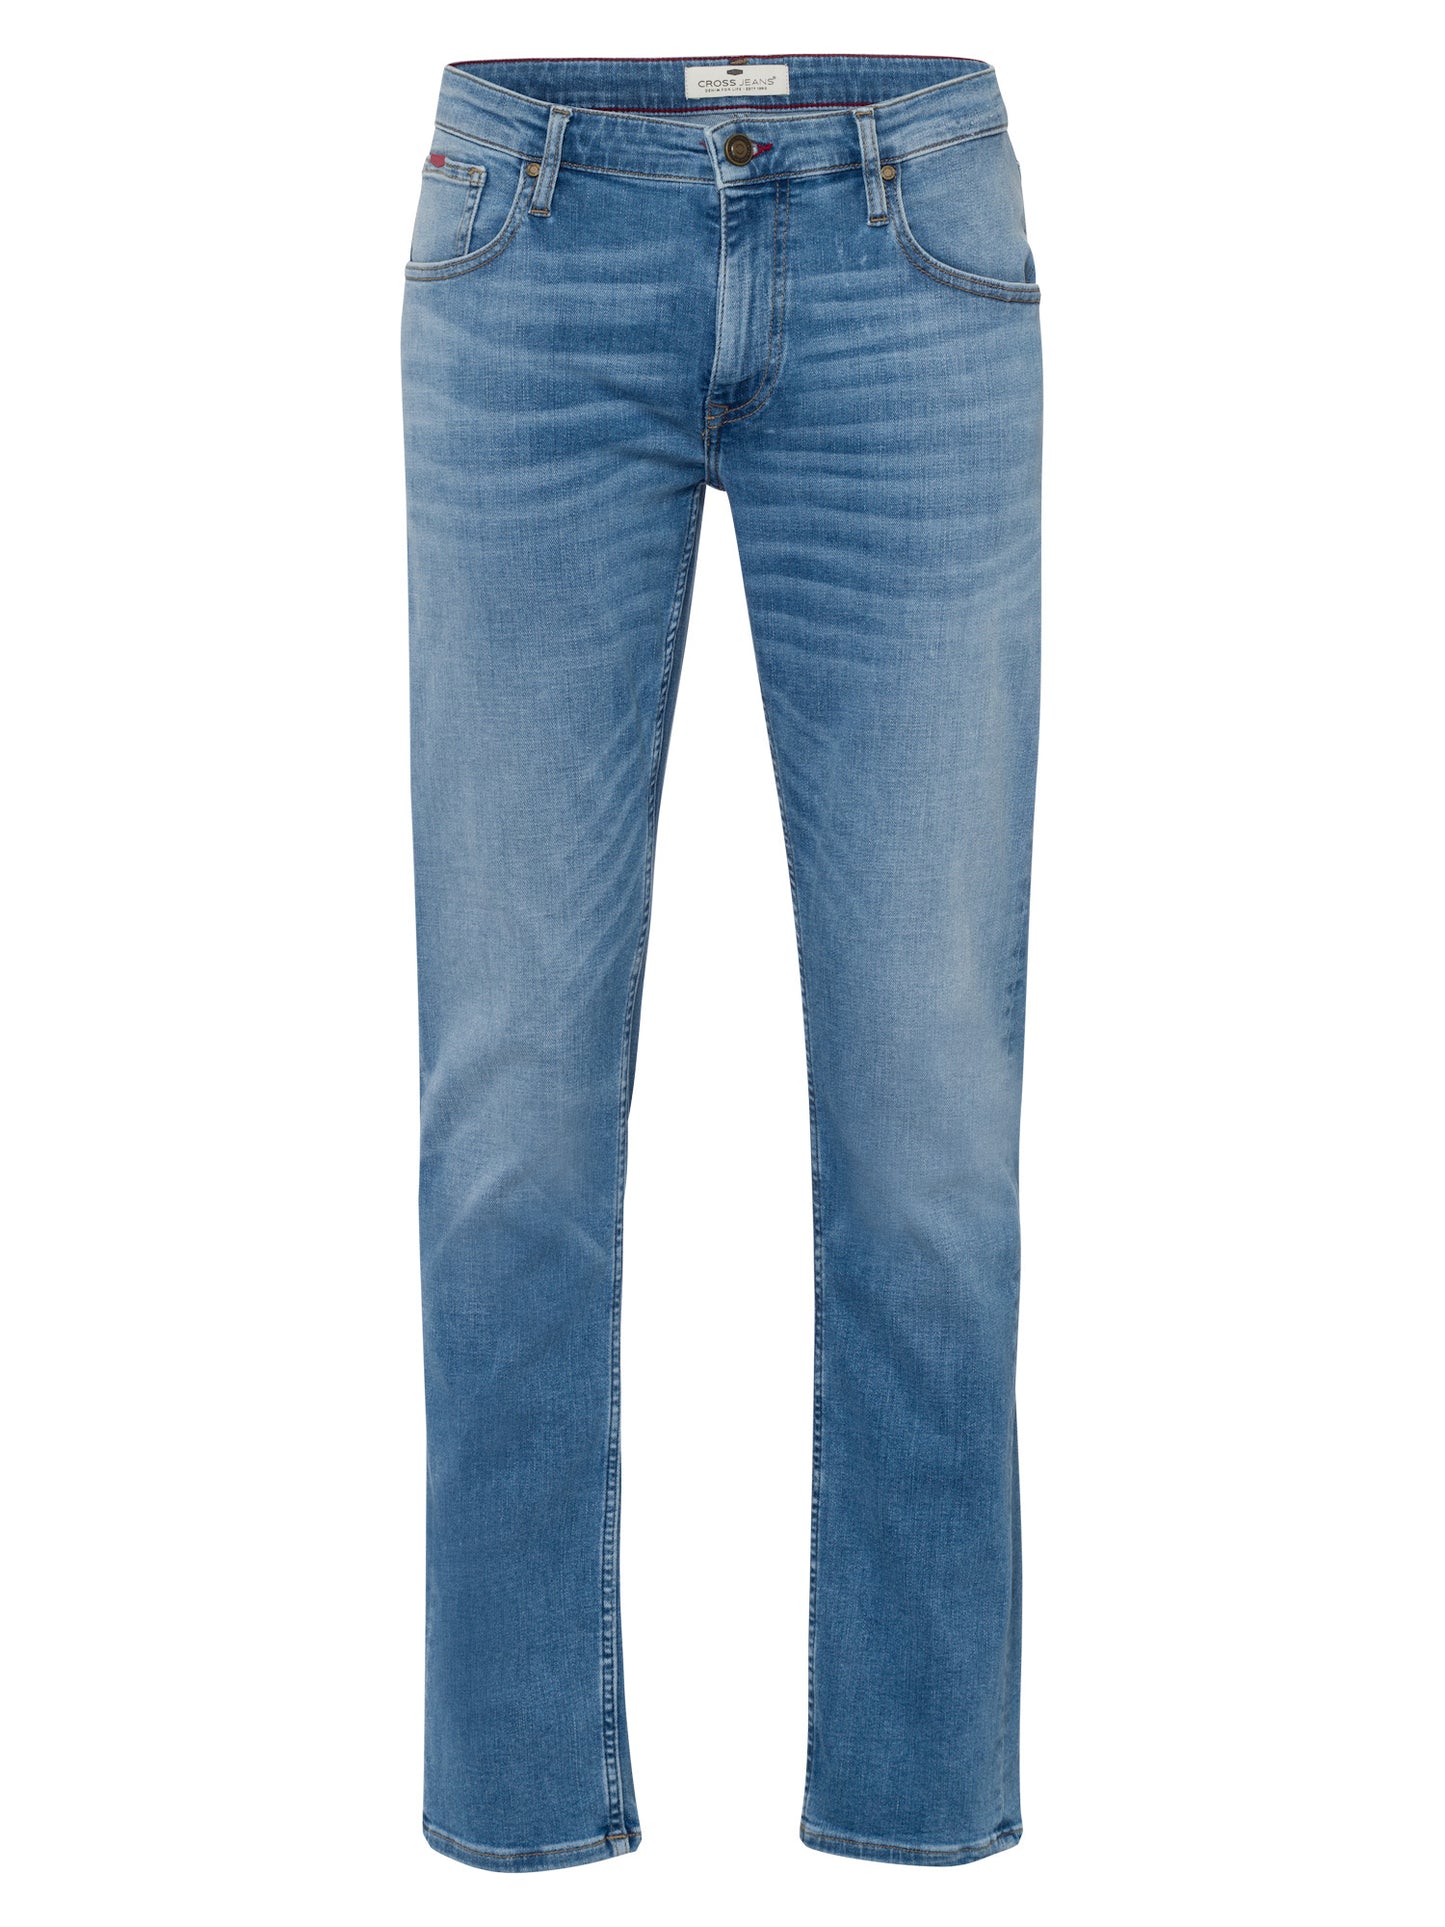 Damien Herren Jeans Slim Fit Regular Waist Straight Leg Hellblau